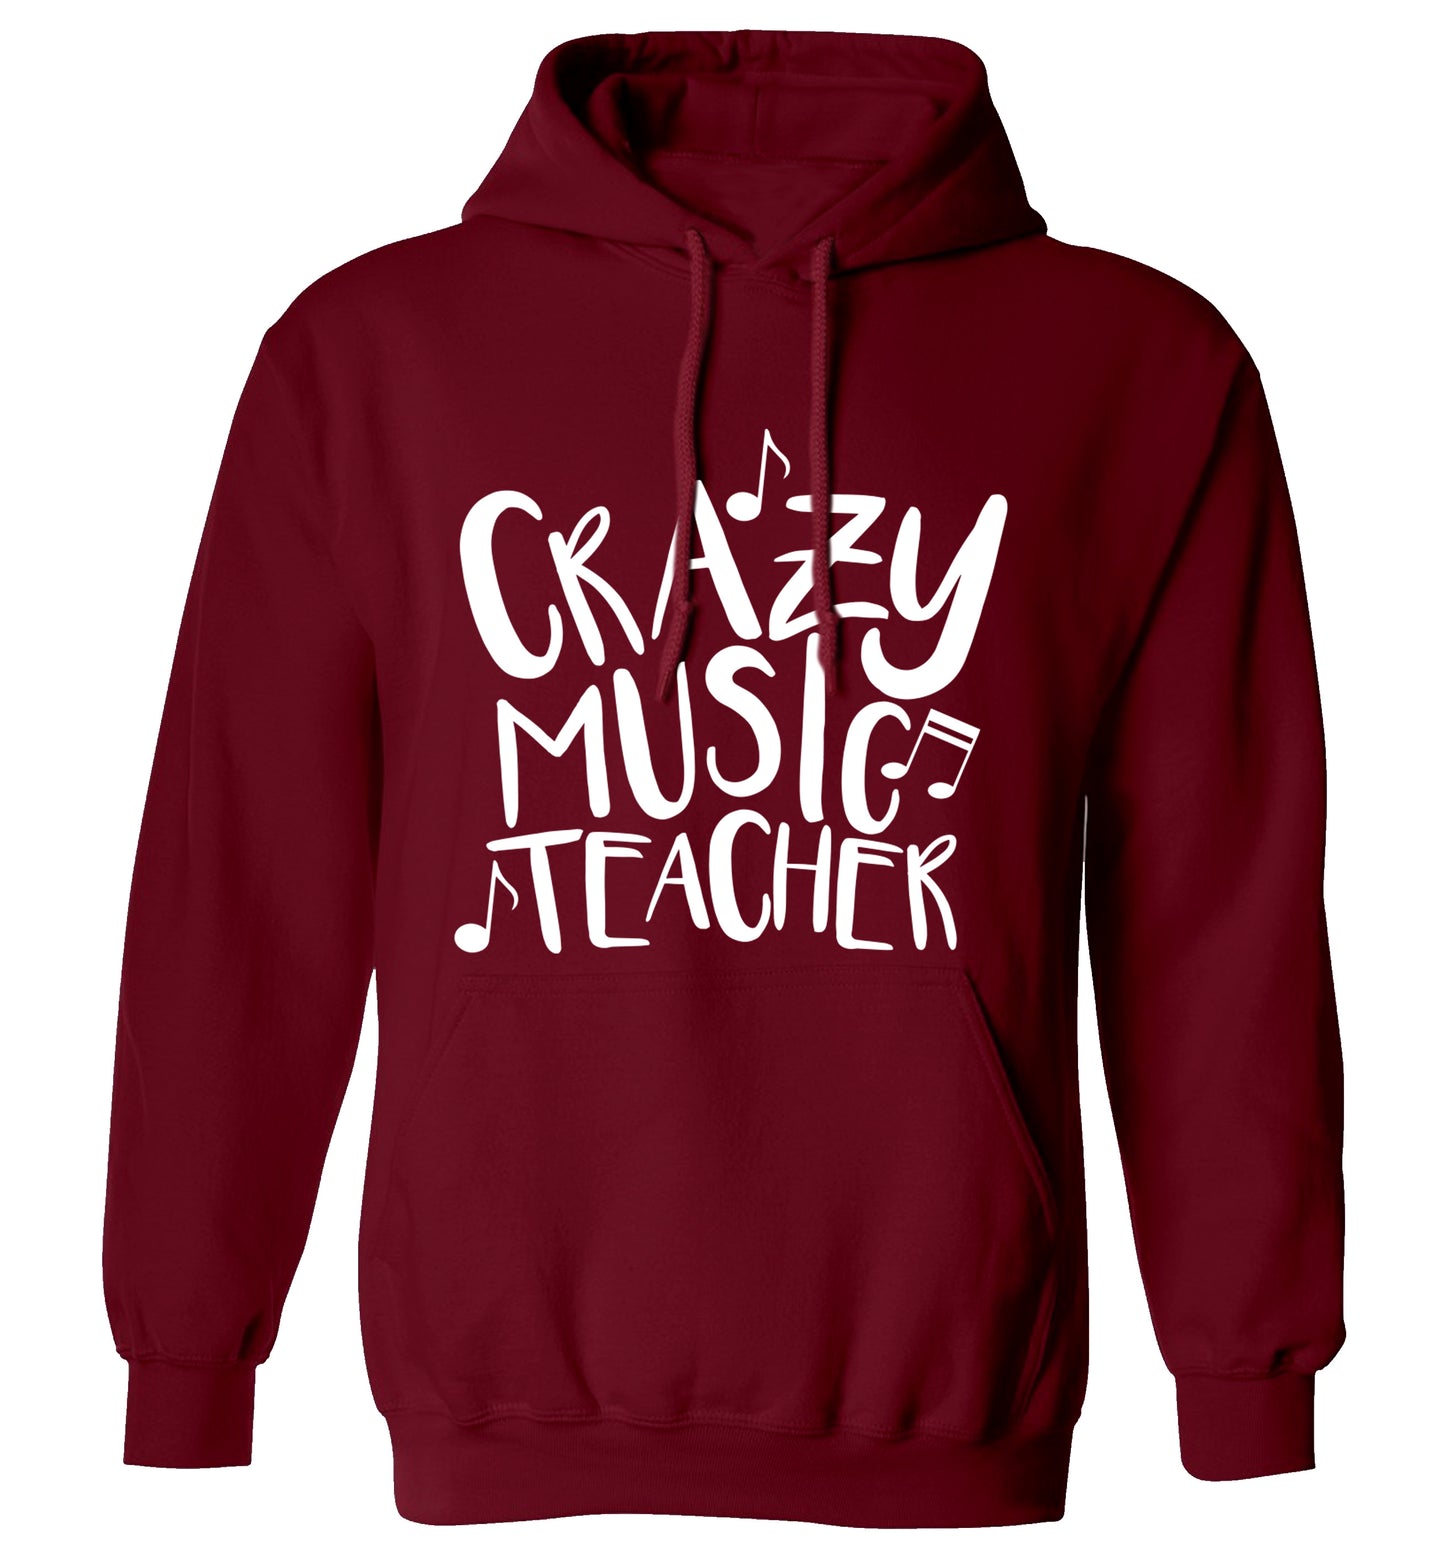 Crazy music teacher adults unisex maroon hoodie 2XL